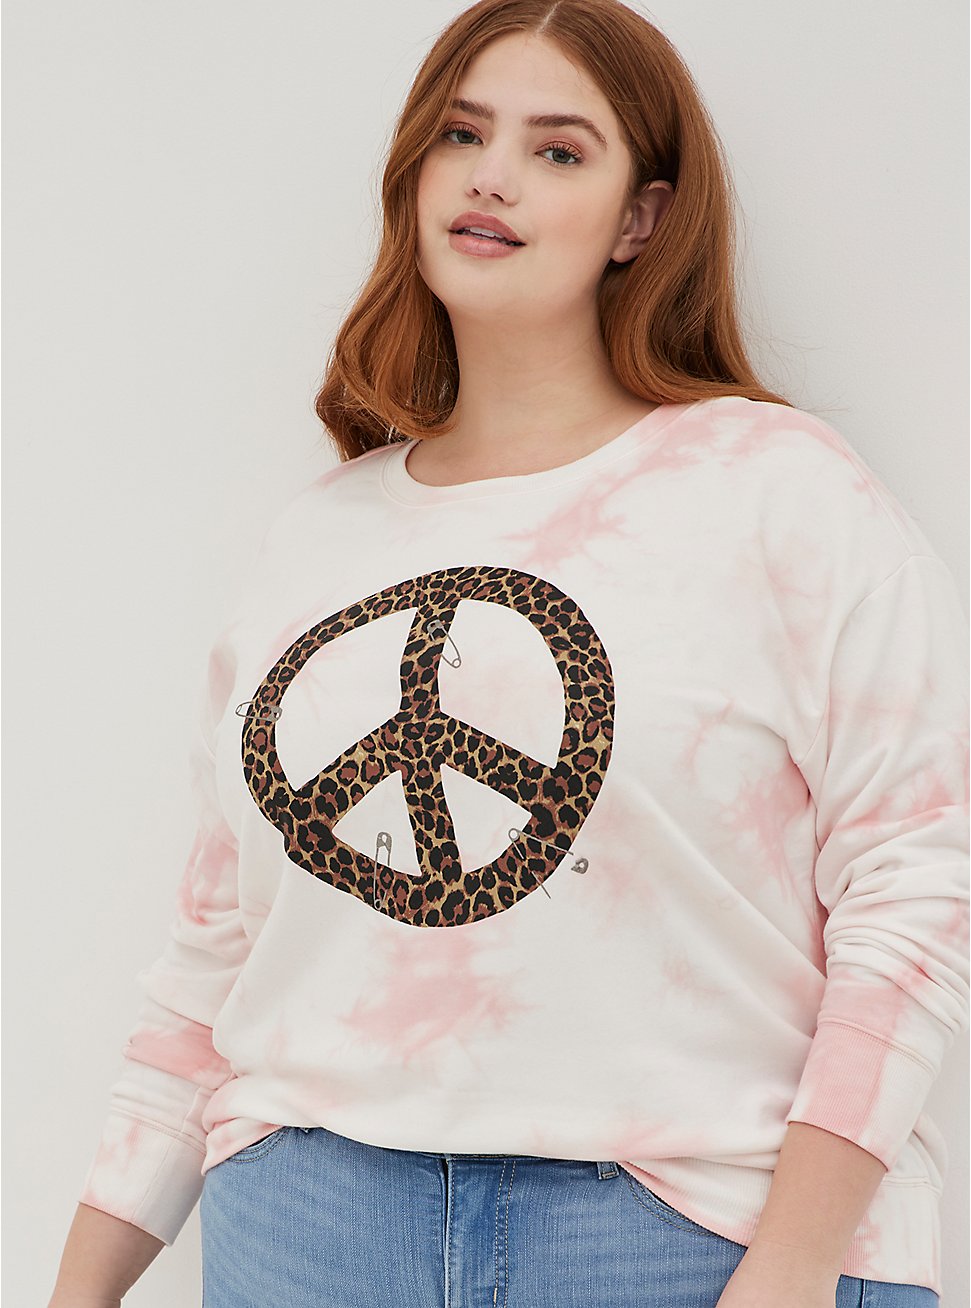 Drop Shoulder Sweatshirt - Super Soft Fleece Peace Tie Dye Pink Leopard, TIE DYE PINK, hi-res